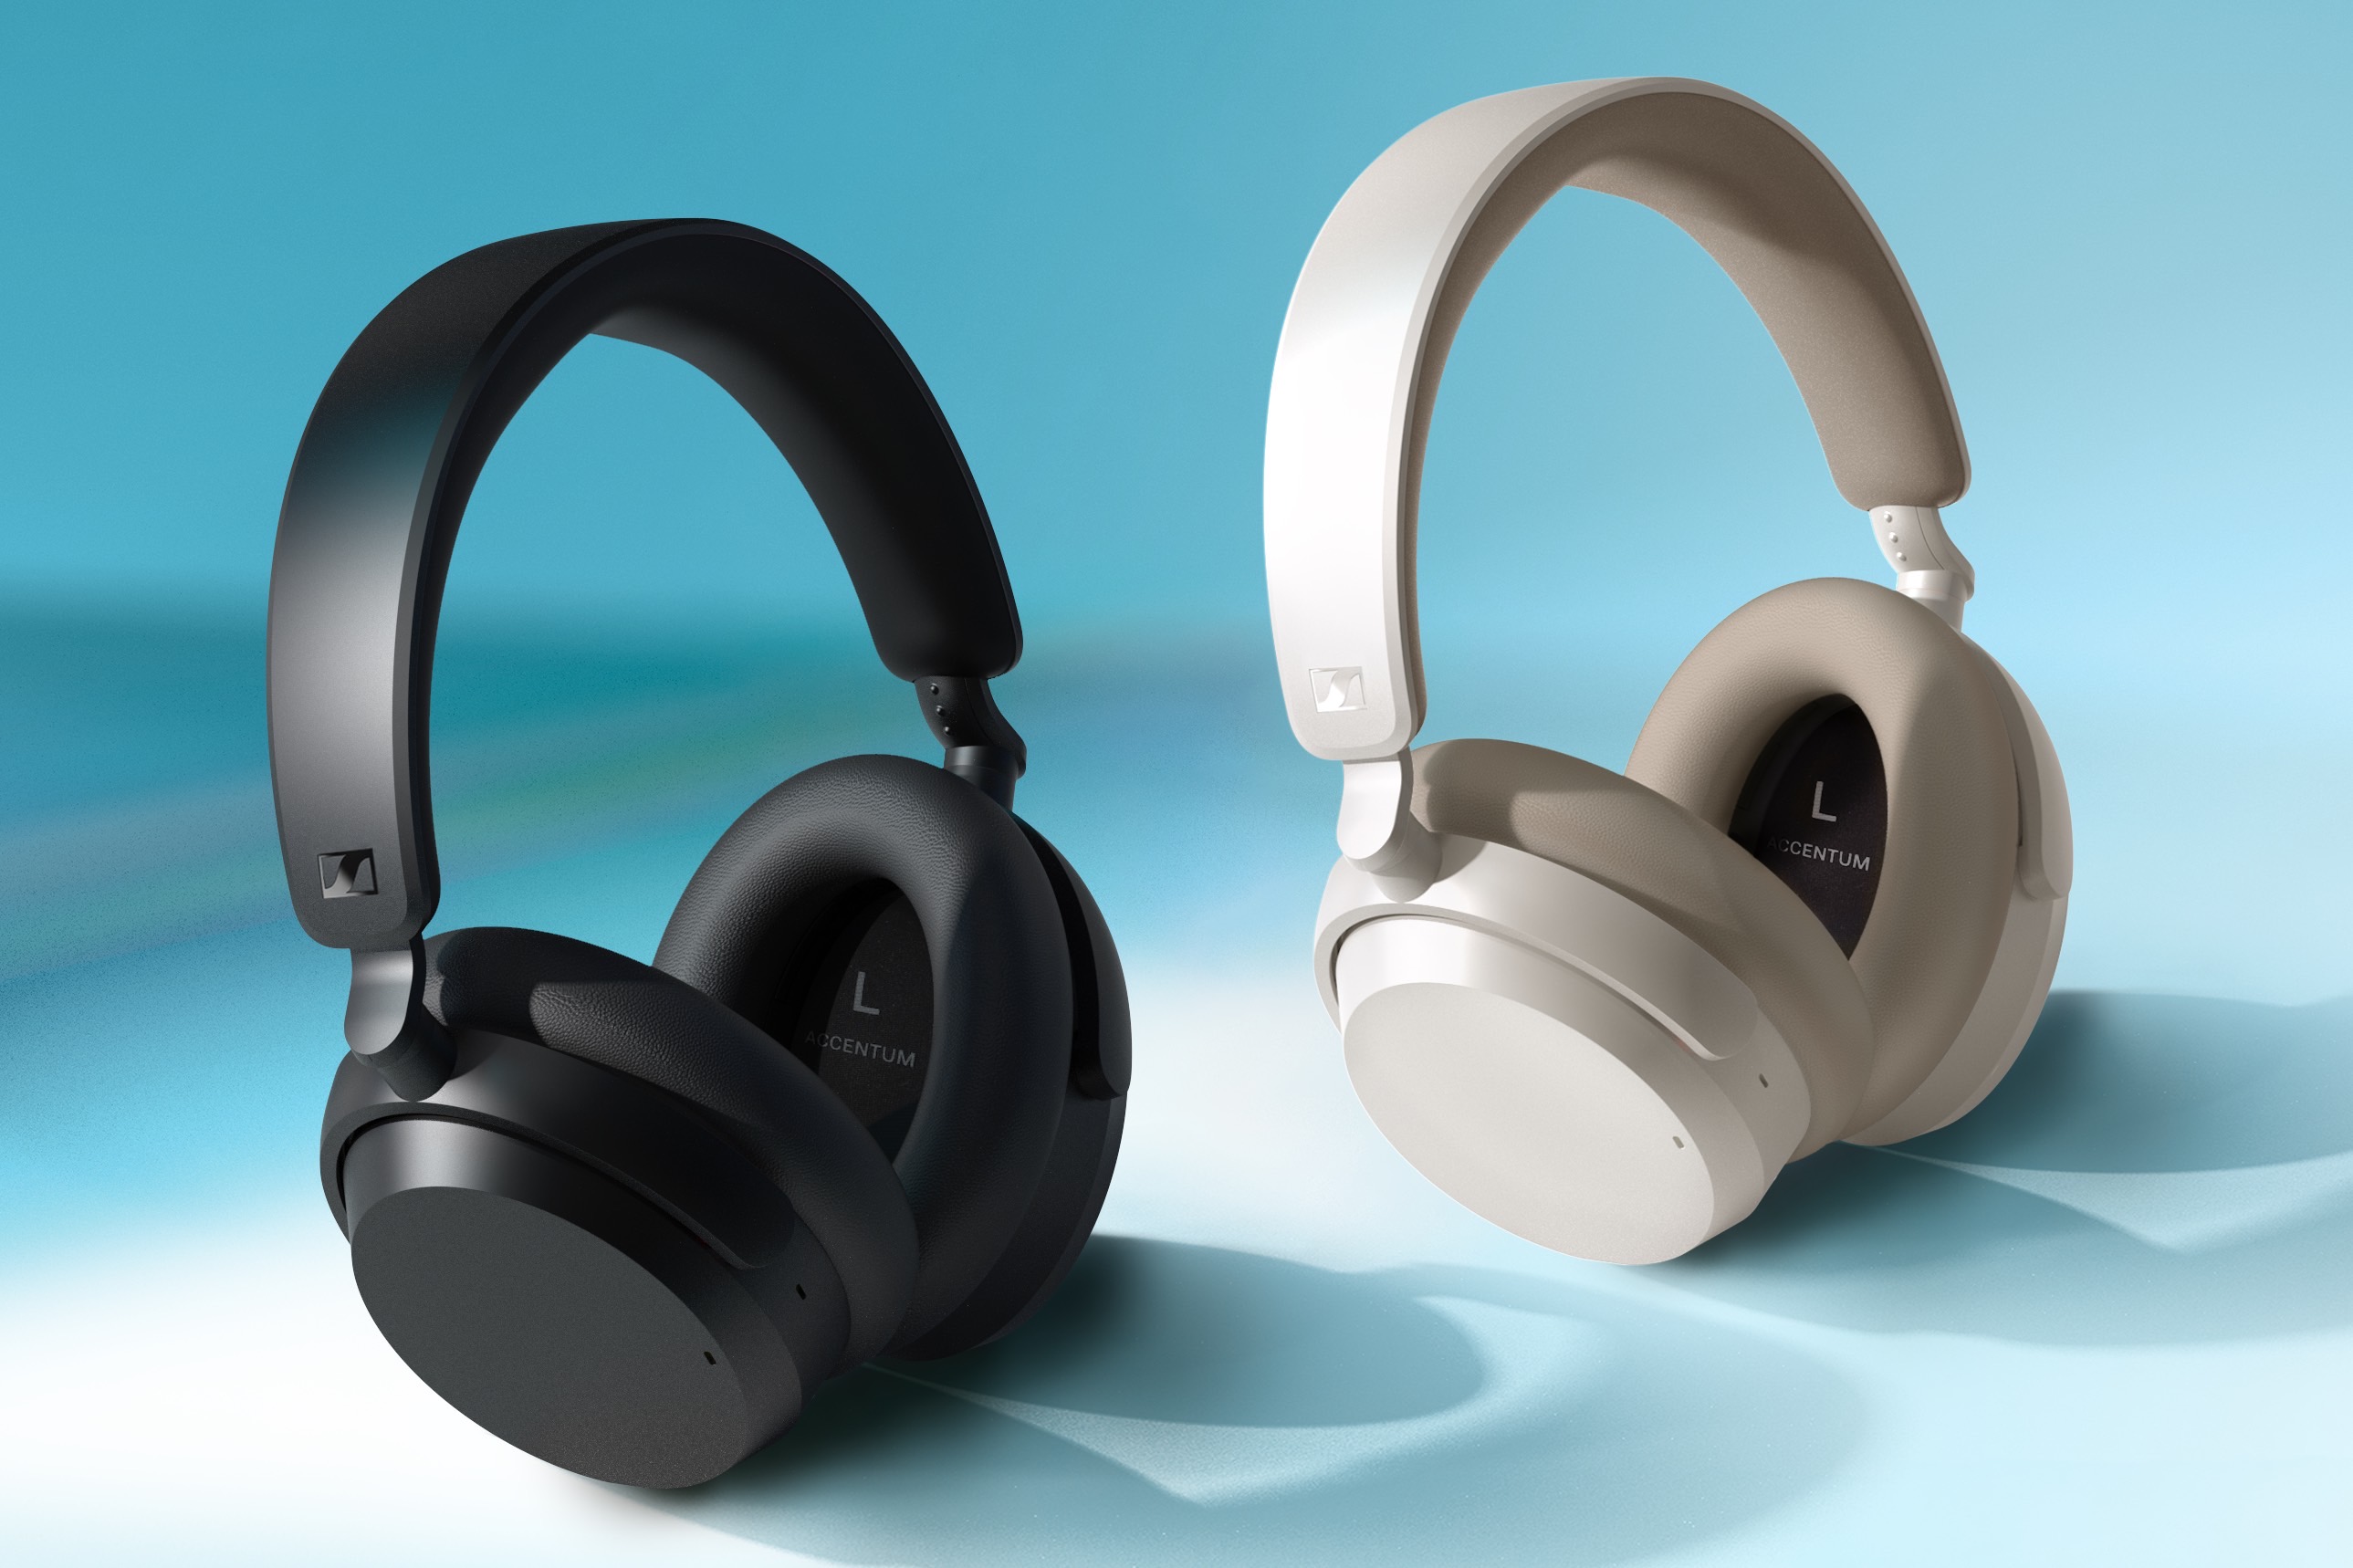 Sennheiser Accentum wireless headphones in black and white colors.